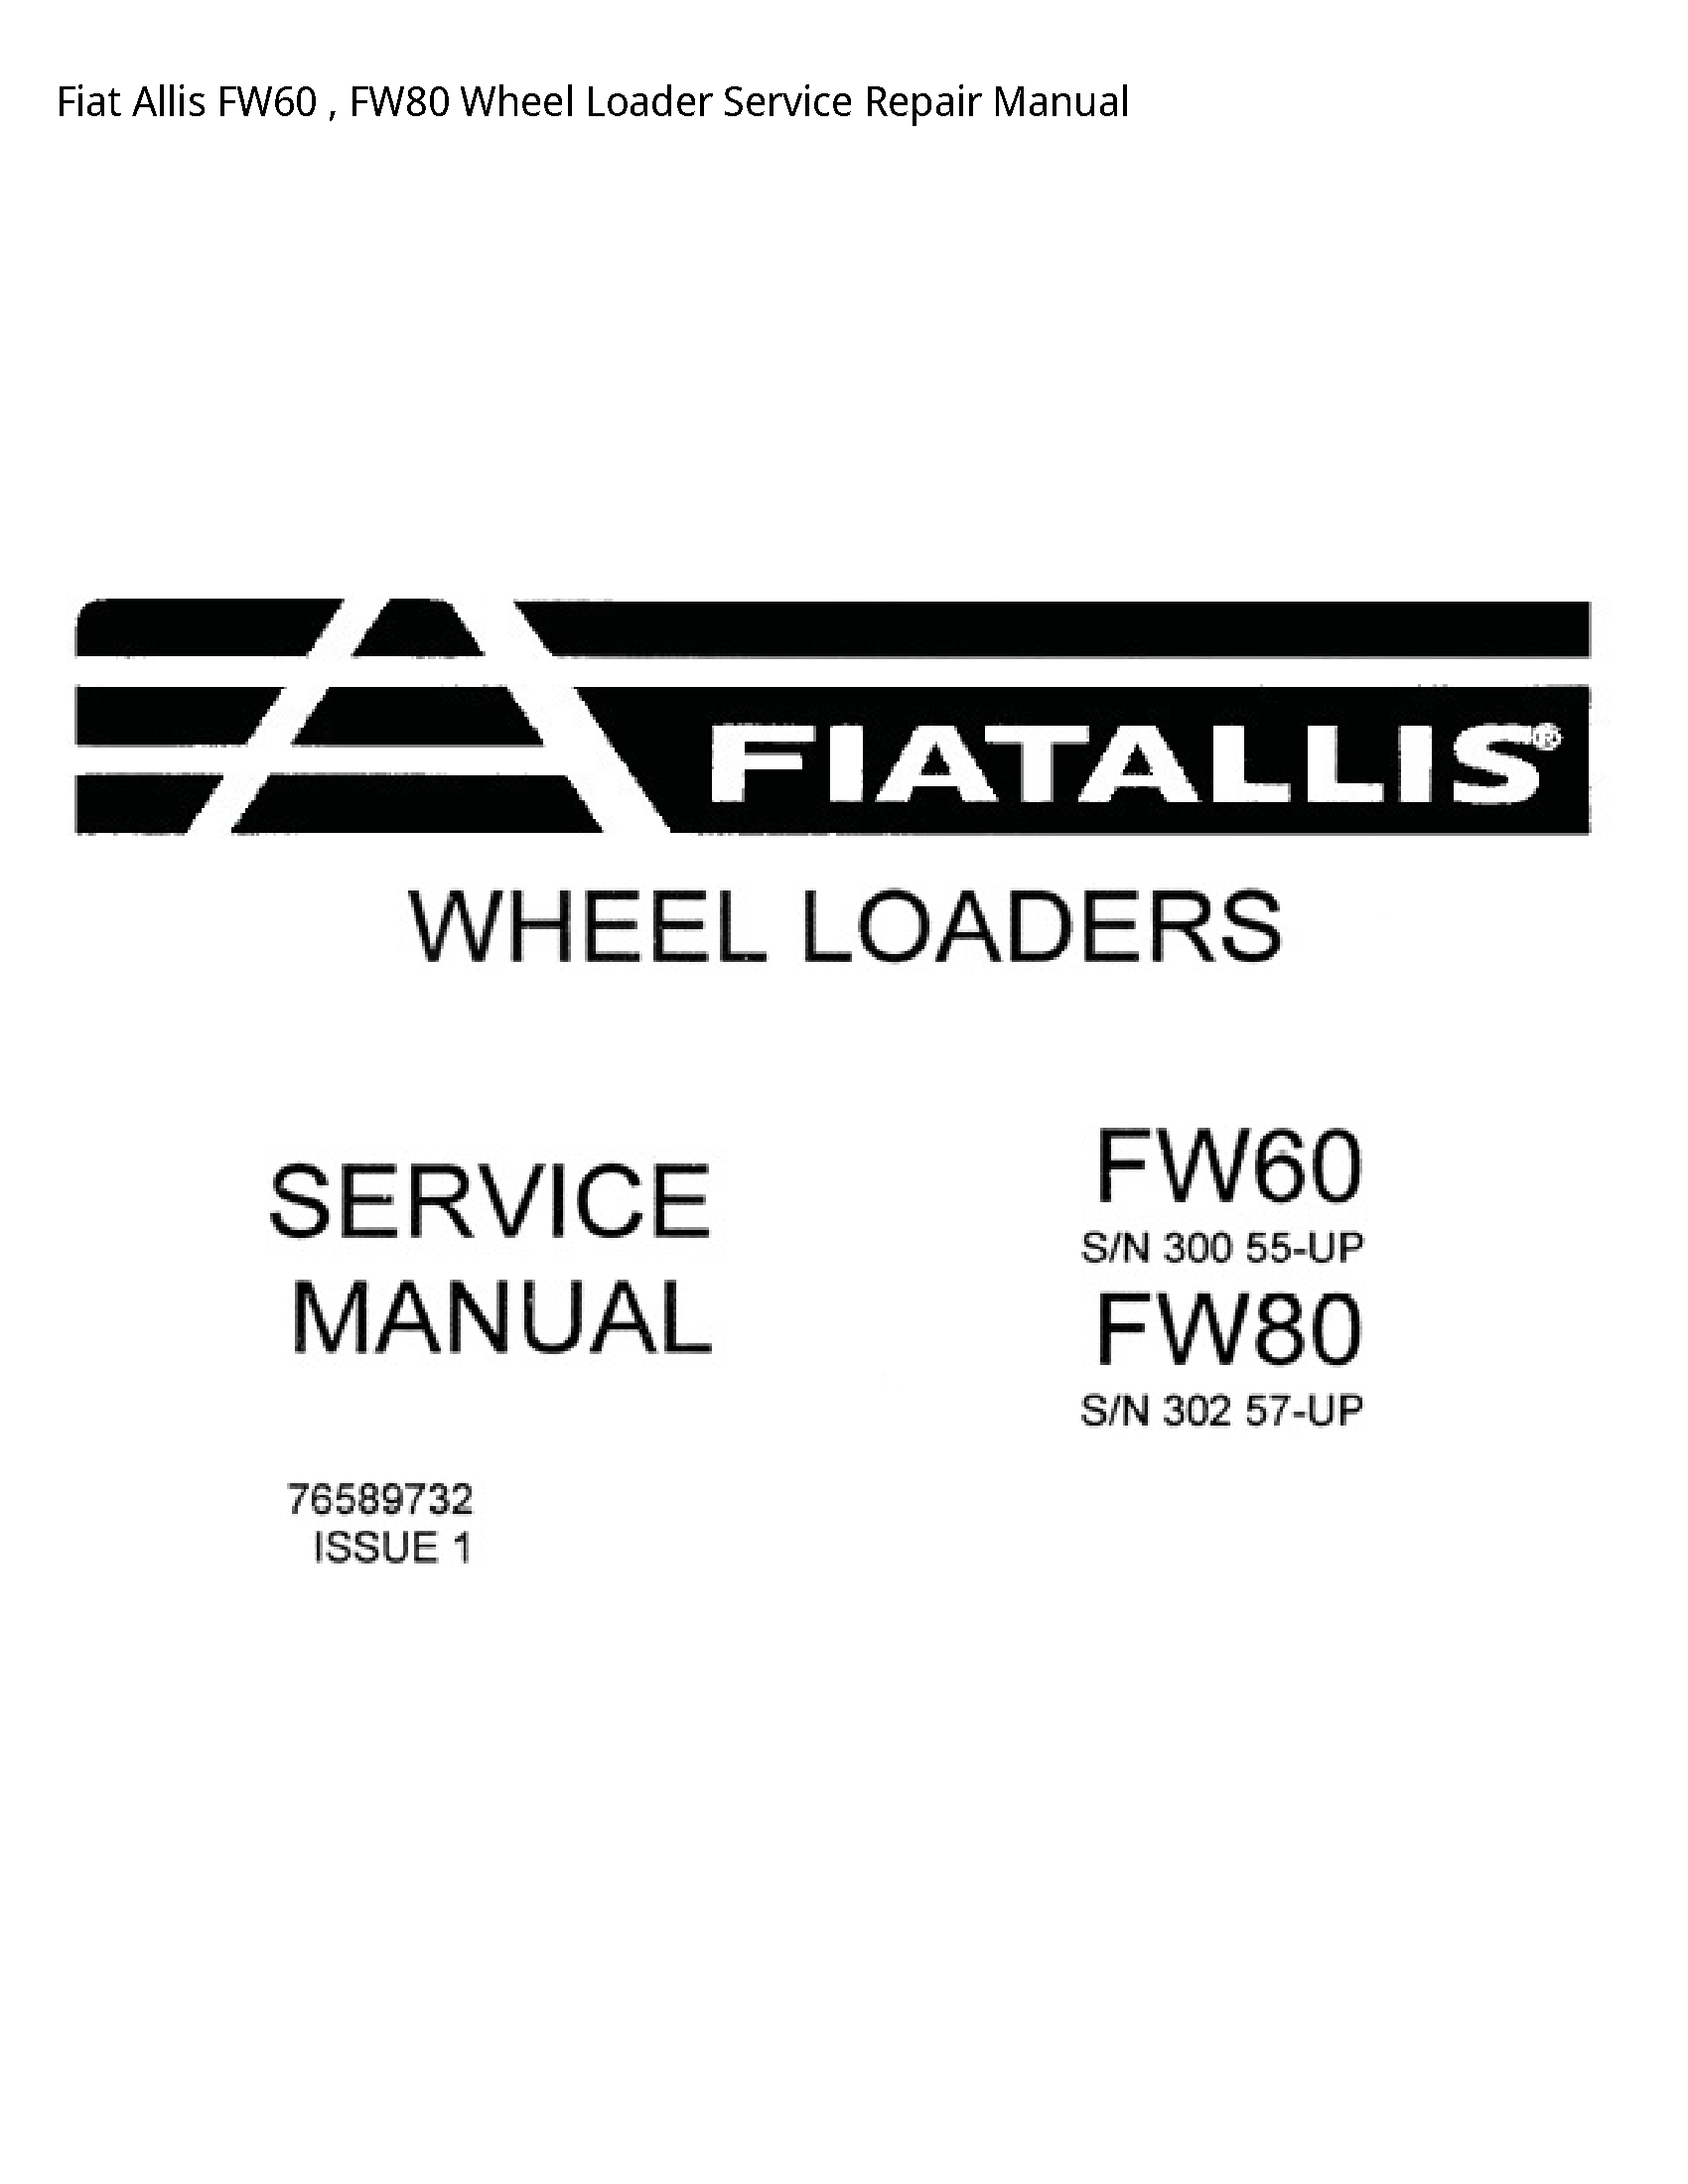 Fiat Allis FW60 Wheel Loader manual